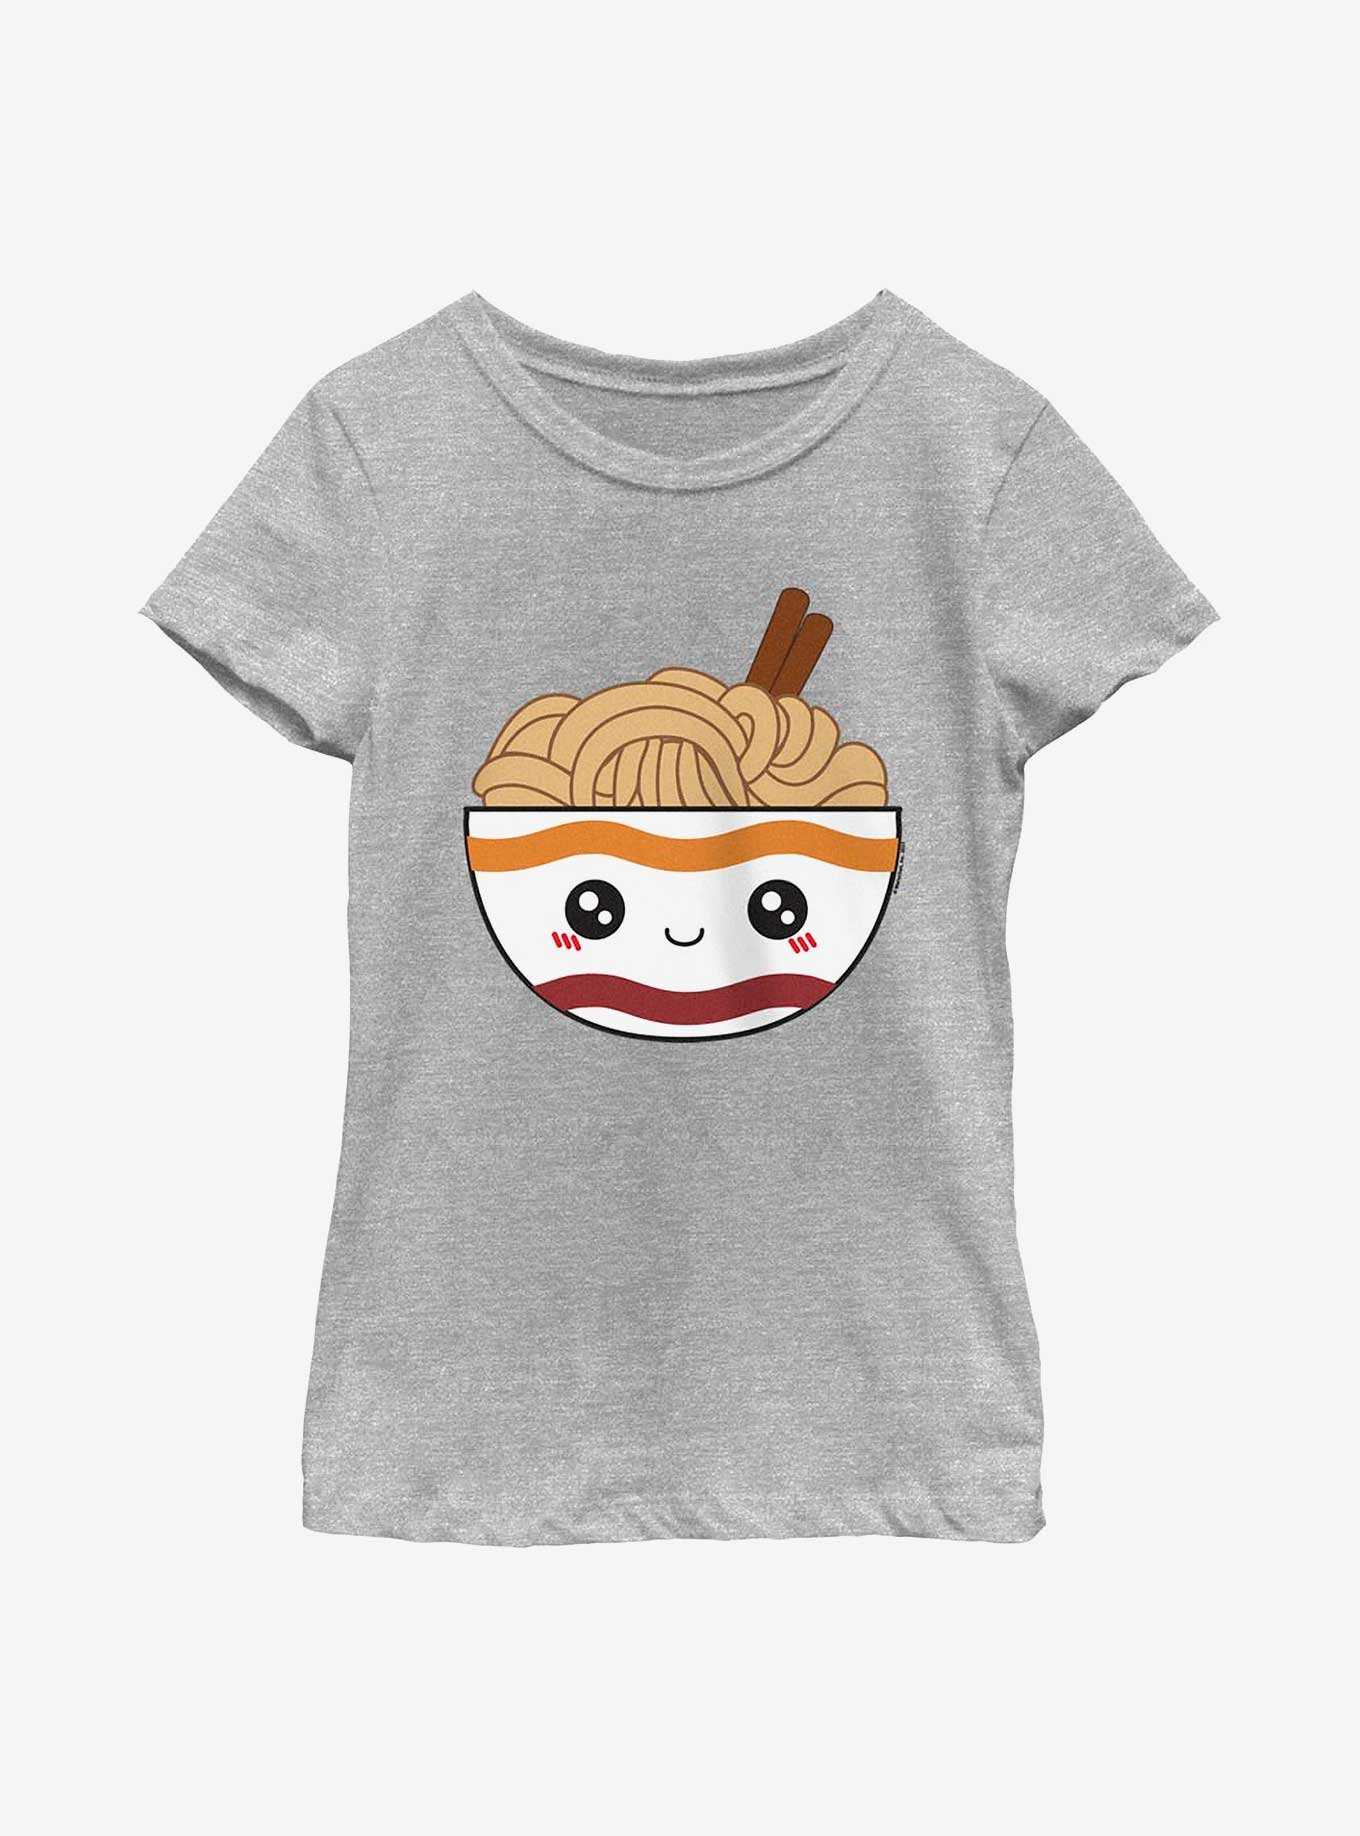 Maruchan Noodle Bowl Youth Girls T-Shirt, , hi-res